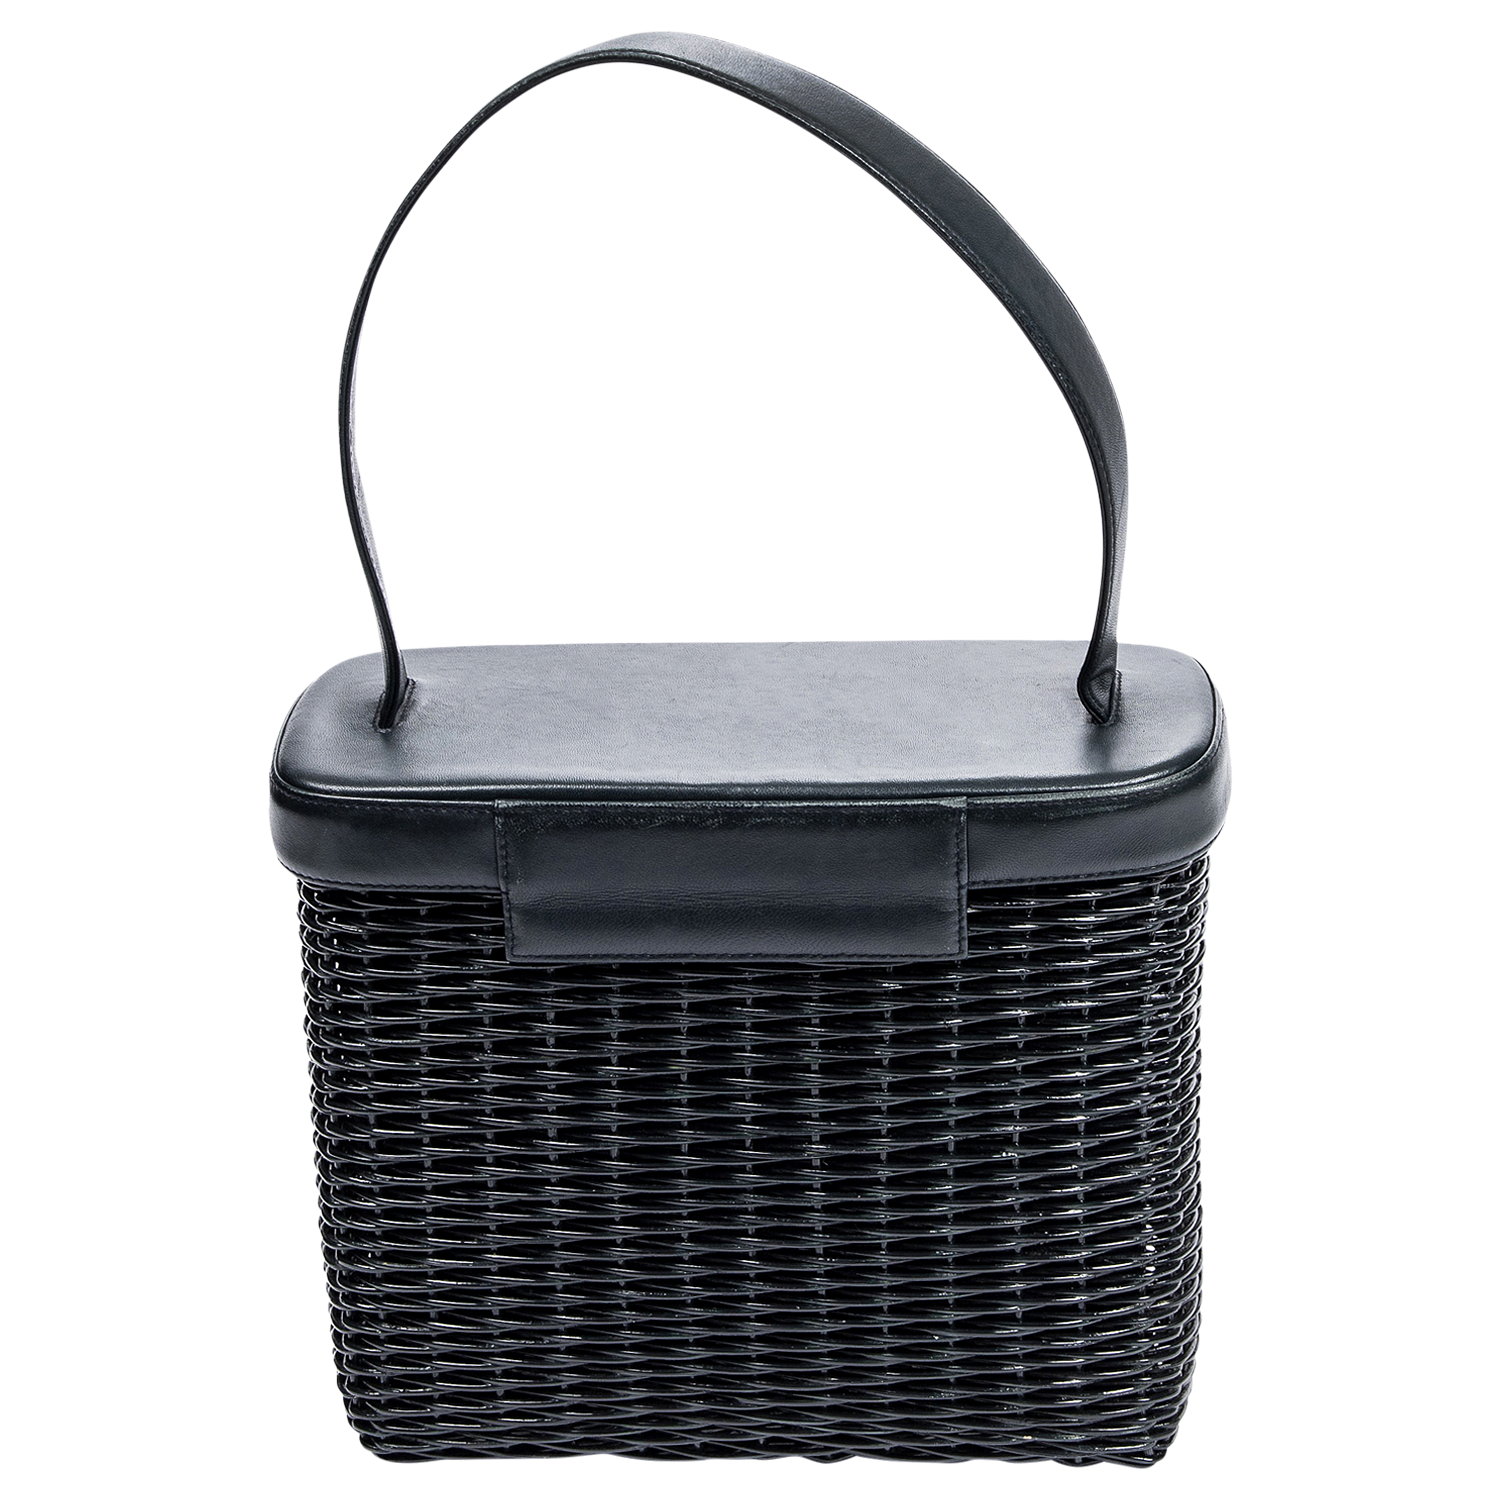 Chanel Limited Edition Black Wicker Basket Bag - shop 